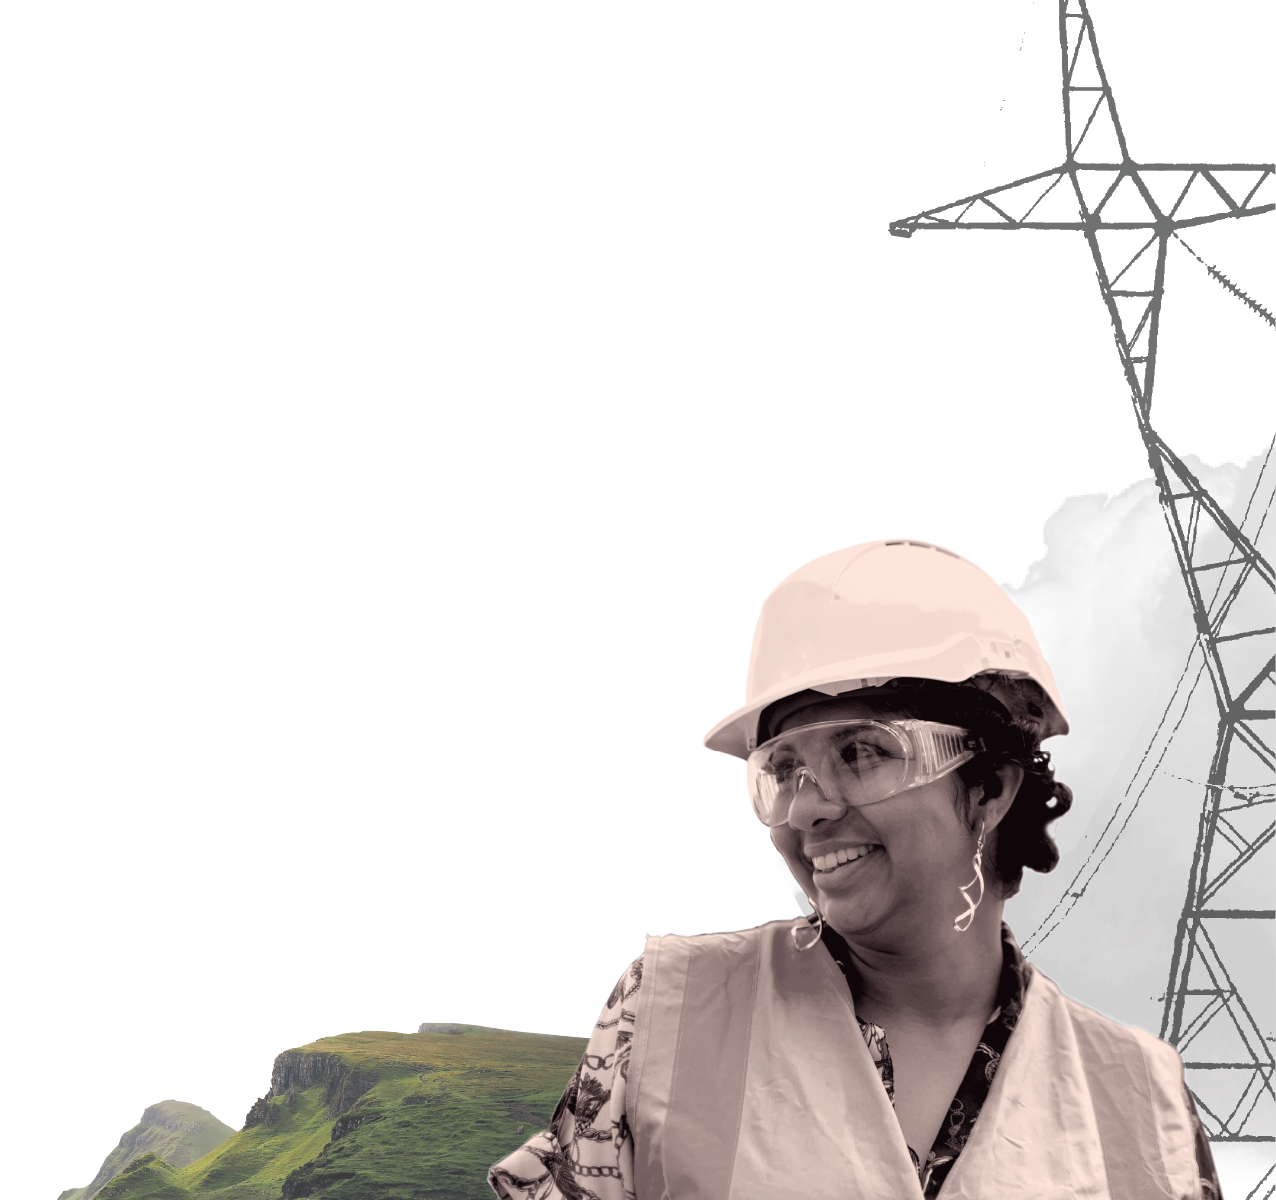 Collage of Woman Civil Engineer in hard hat; powerlines